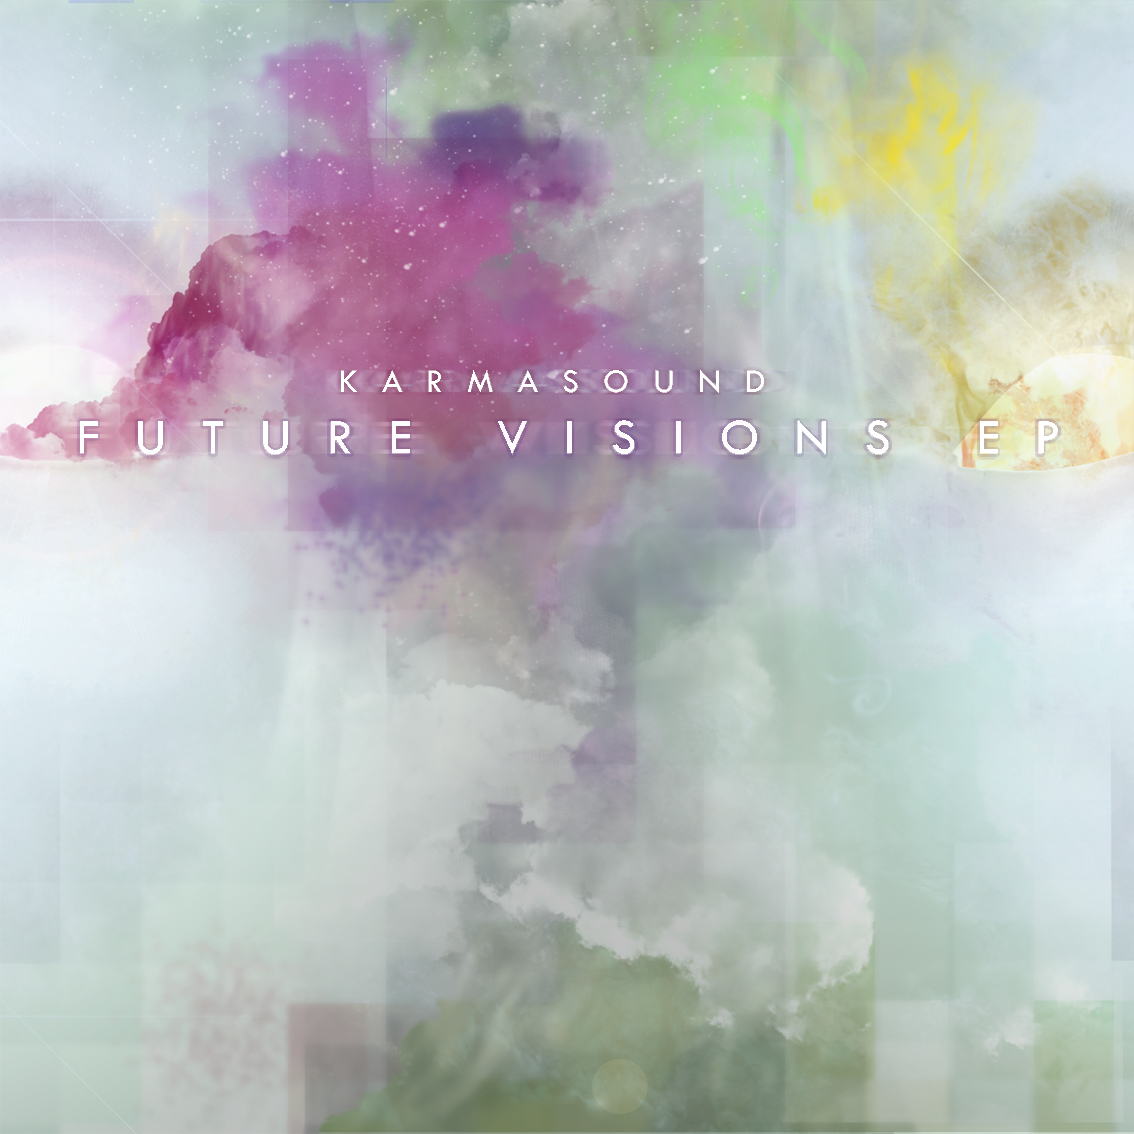 Future_visions_ep